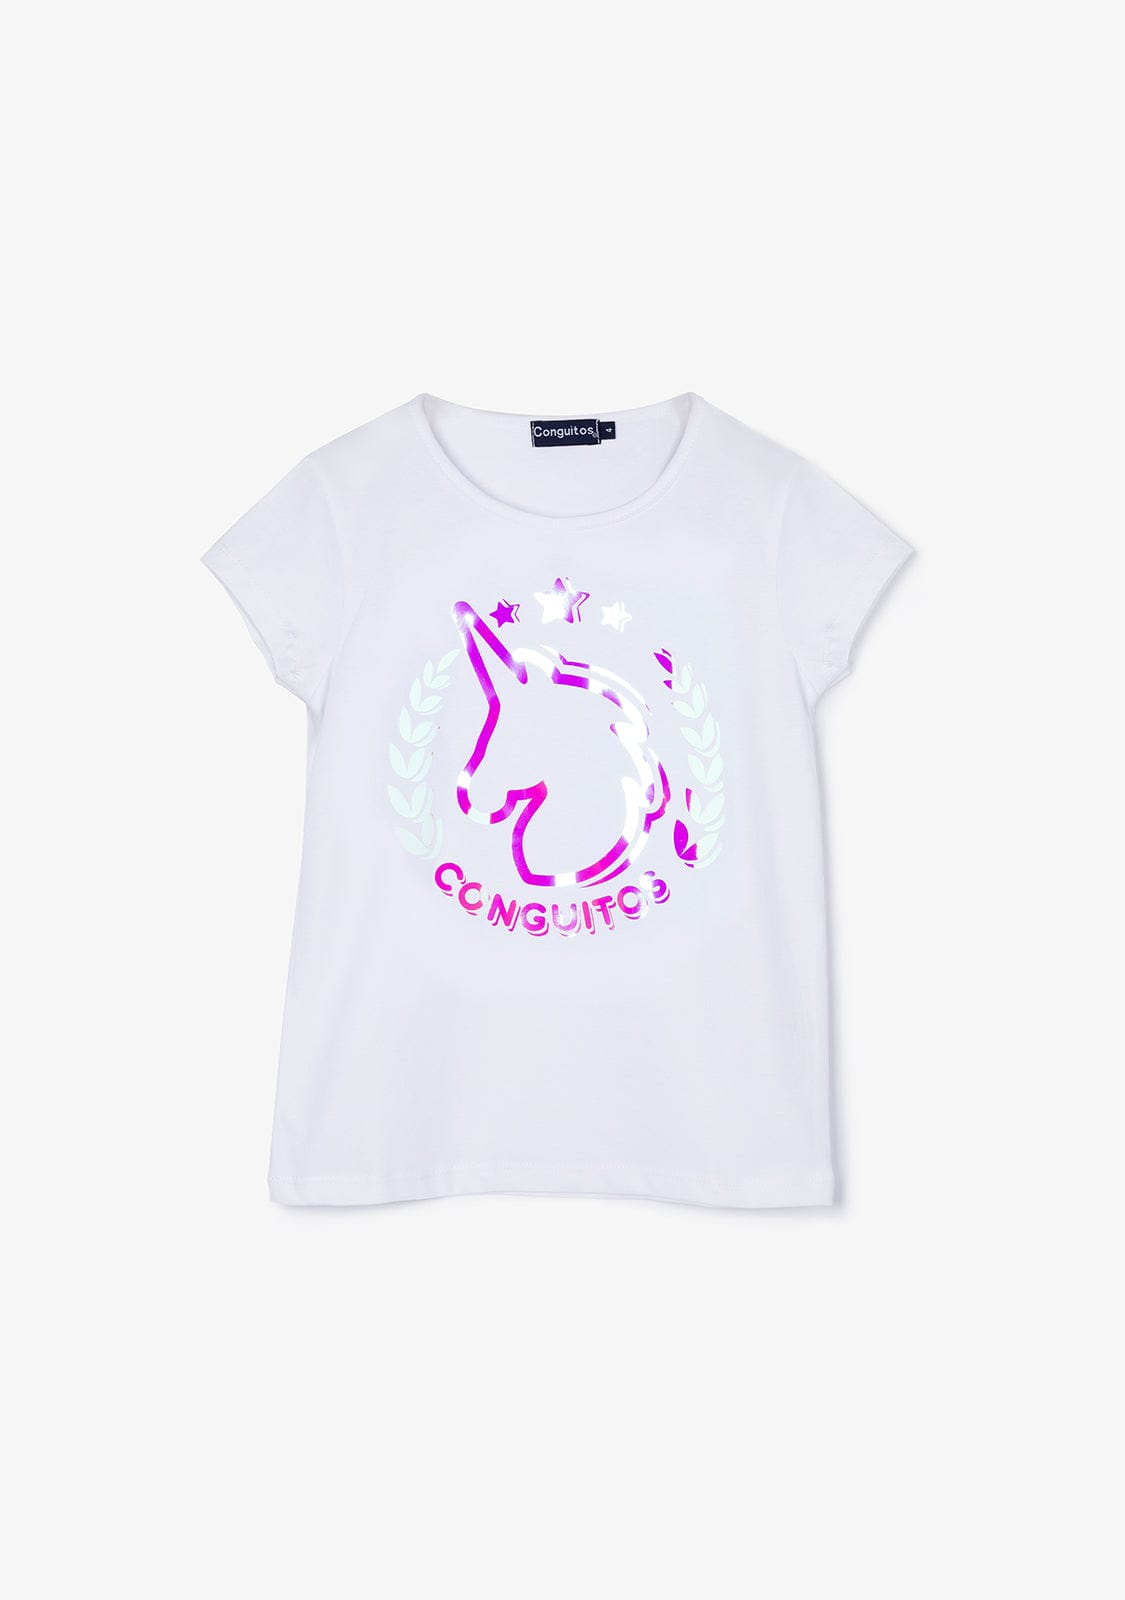 CONGUITOS TEXTIL Clothing Girl's White Unicorn T-shirt